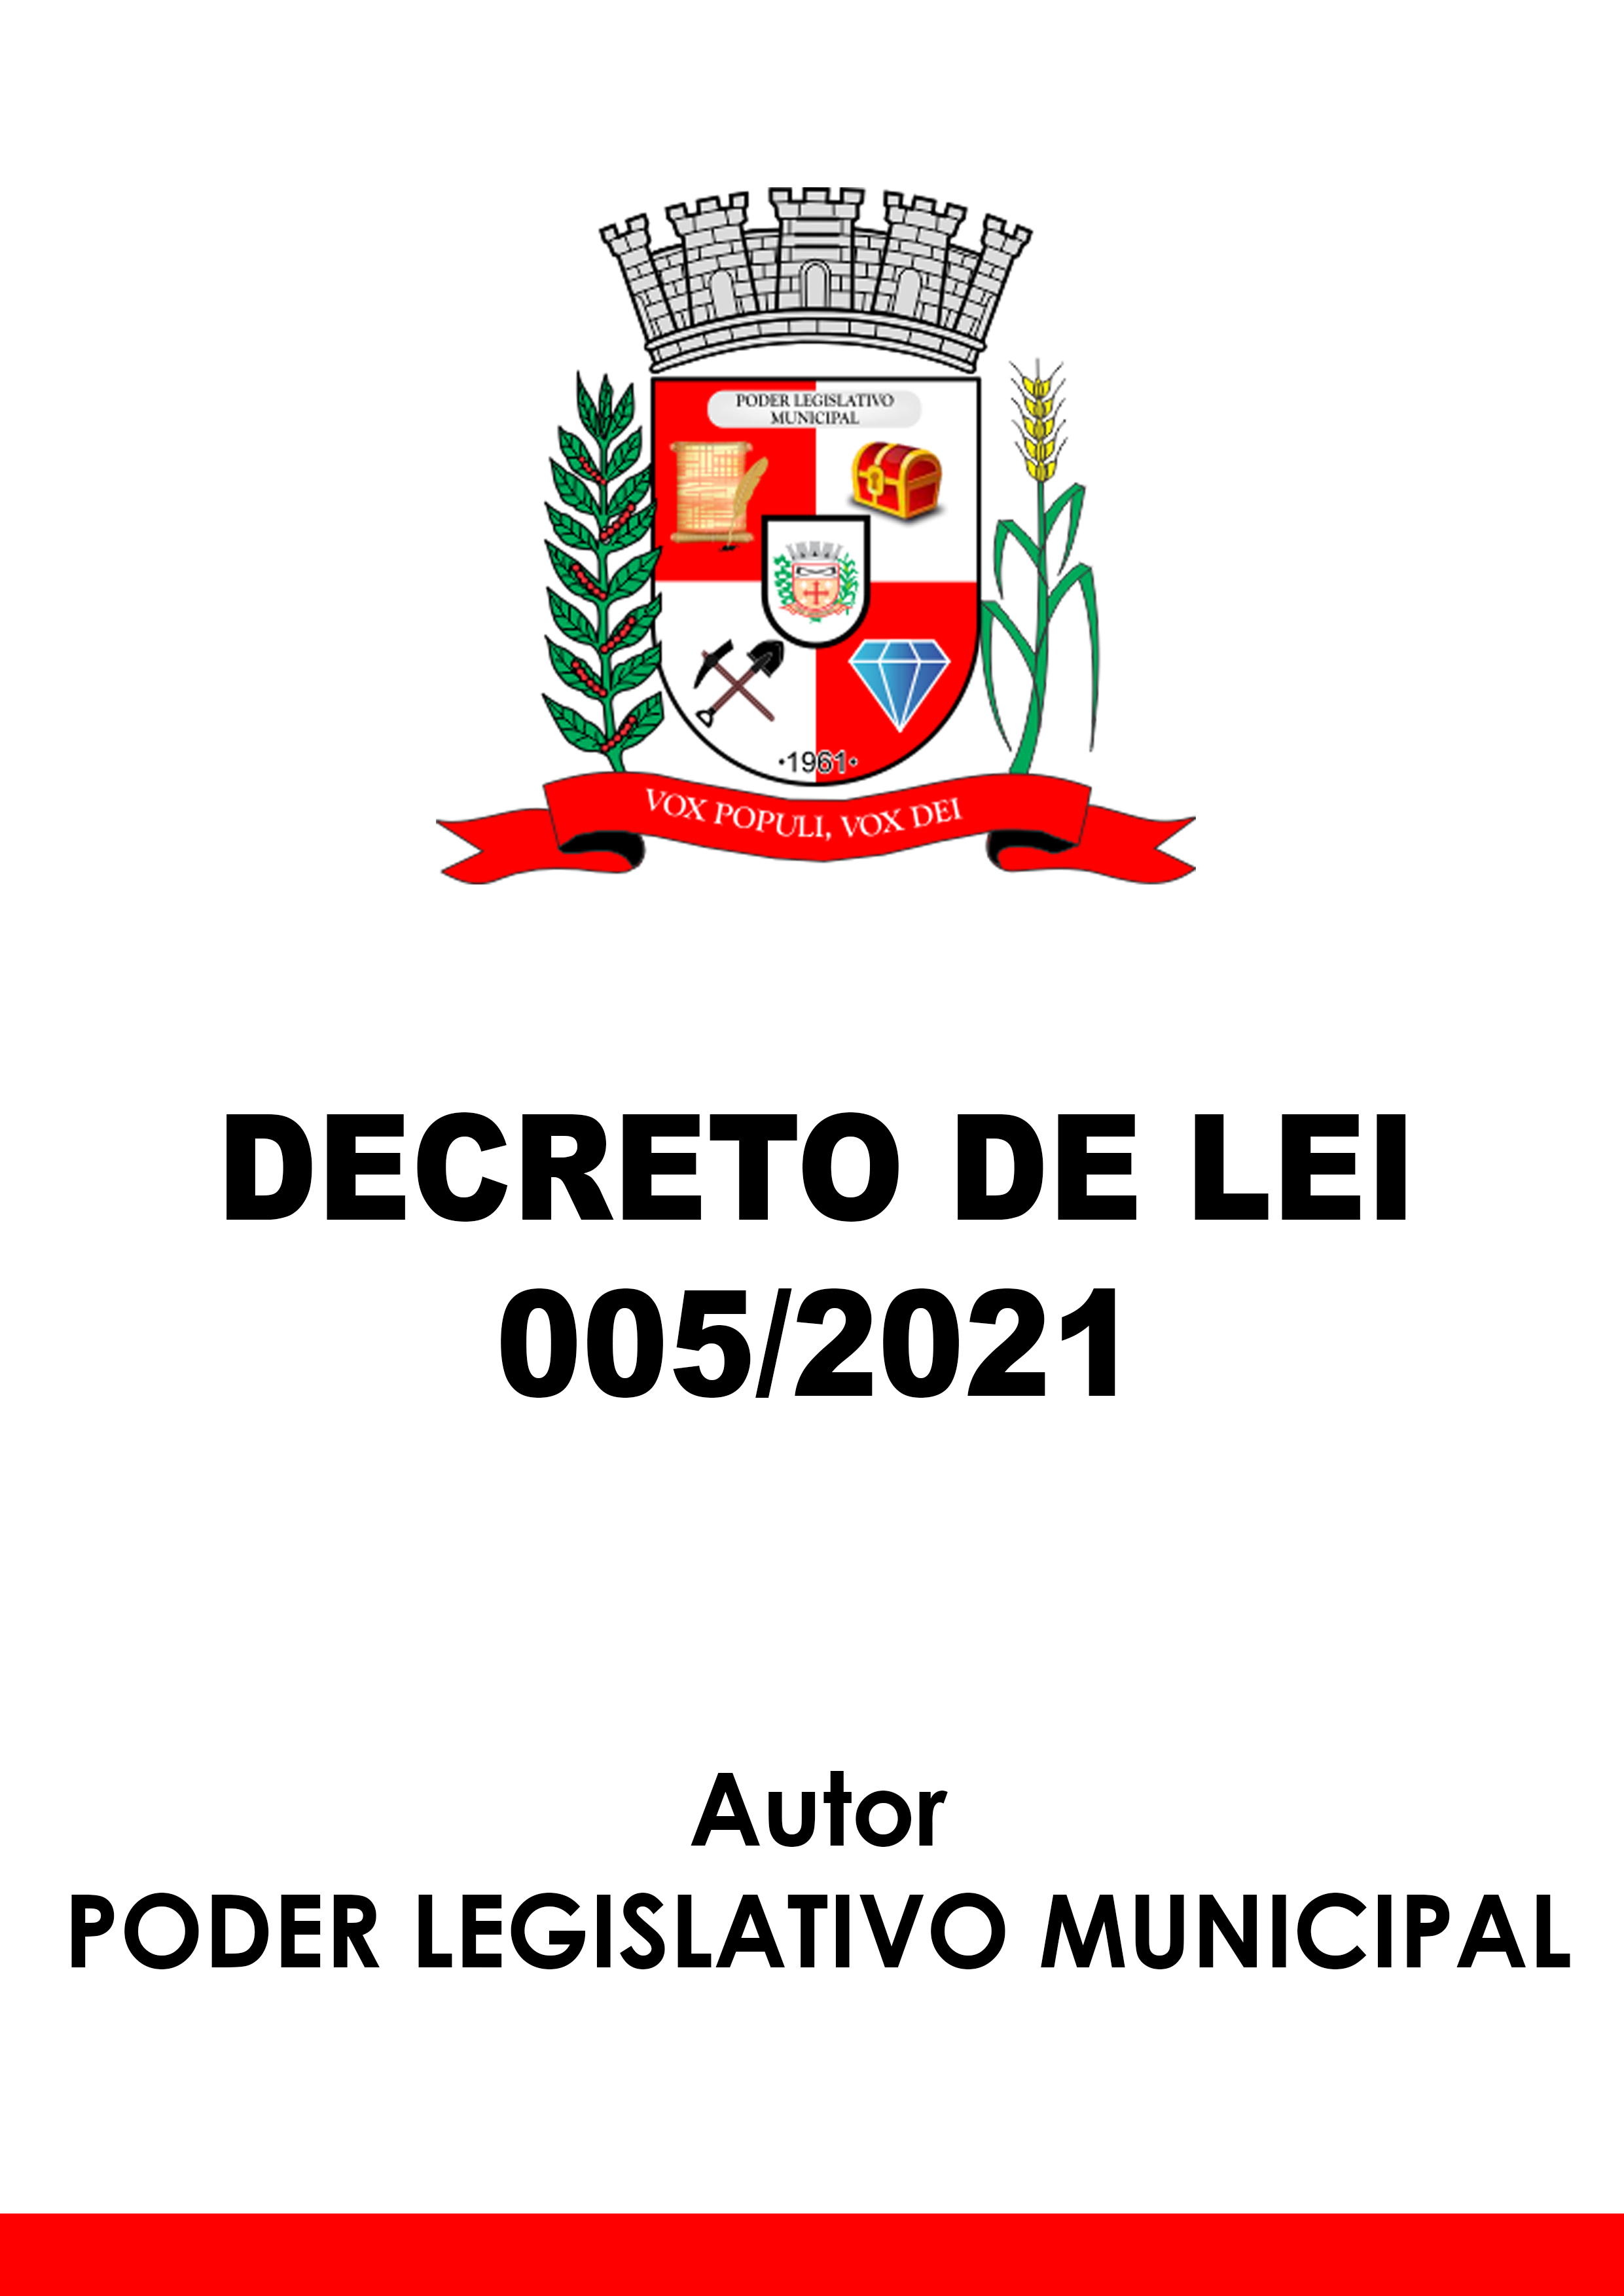 Decreto 005/2021 - Autor: Poder Legislativo Municipal